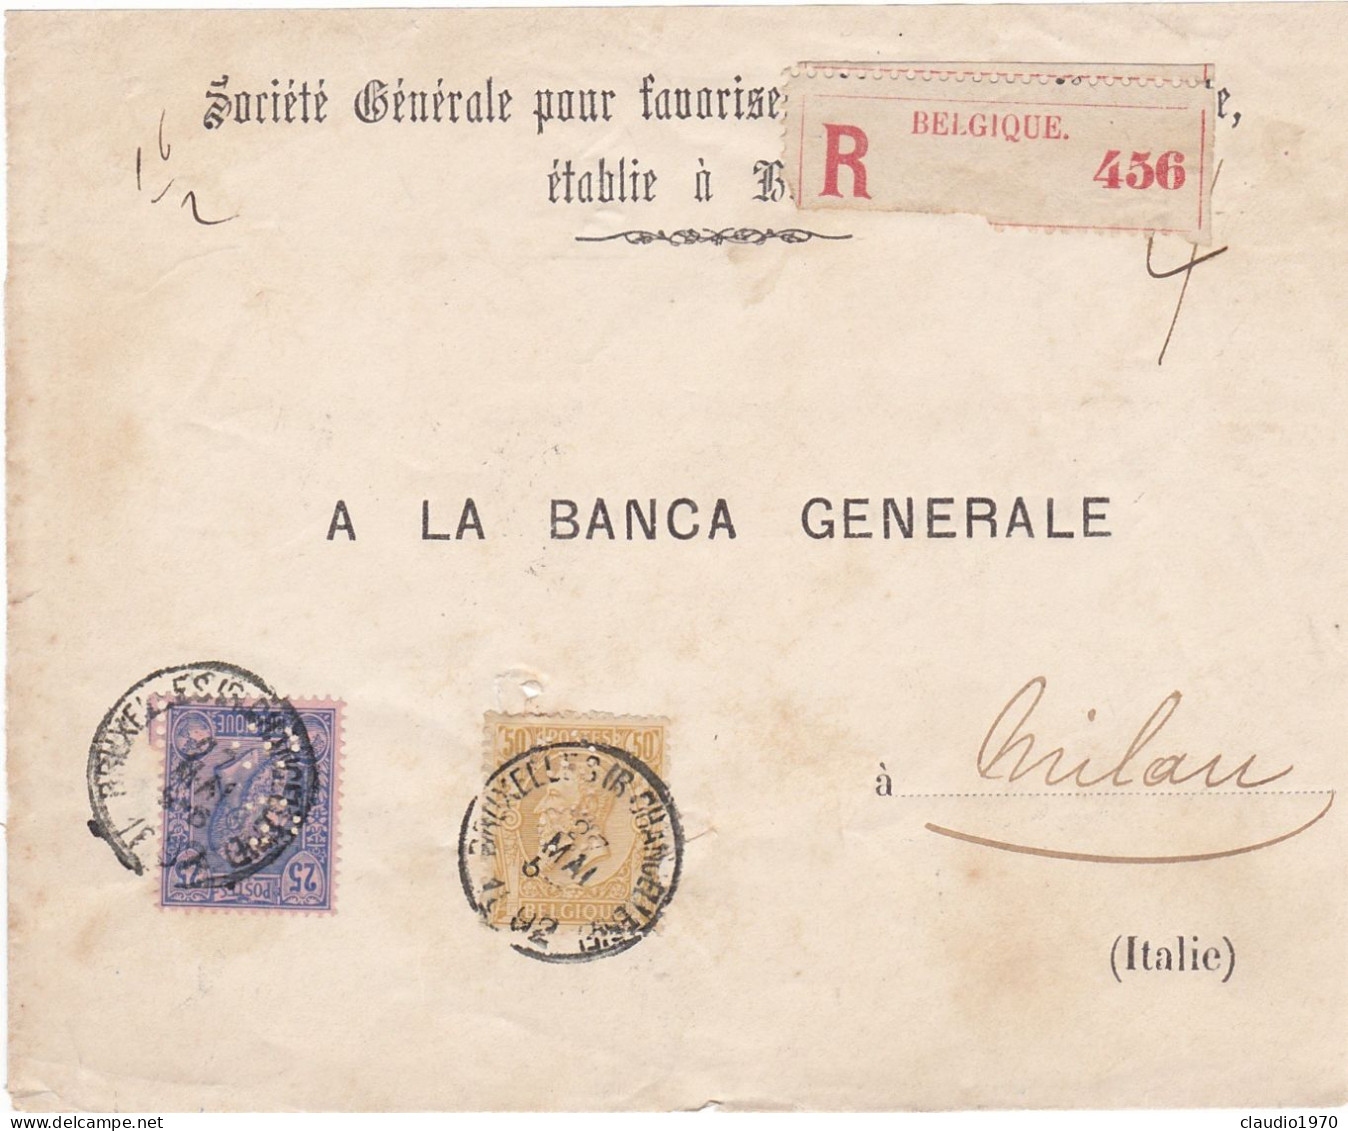 BELGIO -  BRUXELLES - PERFIN - FRONTESPIZIO - SOCìèTè GèNèRALE POORISER PUR FAVORISE VIAGGIATA PER MILAN - ITALIA - 1892 - 1863-09